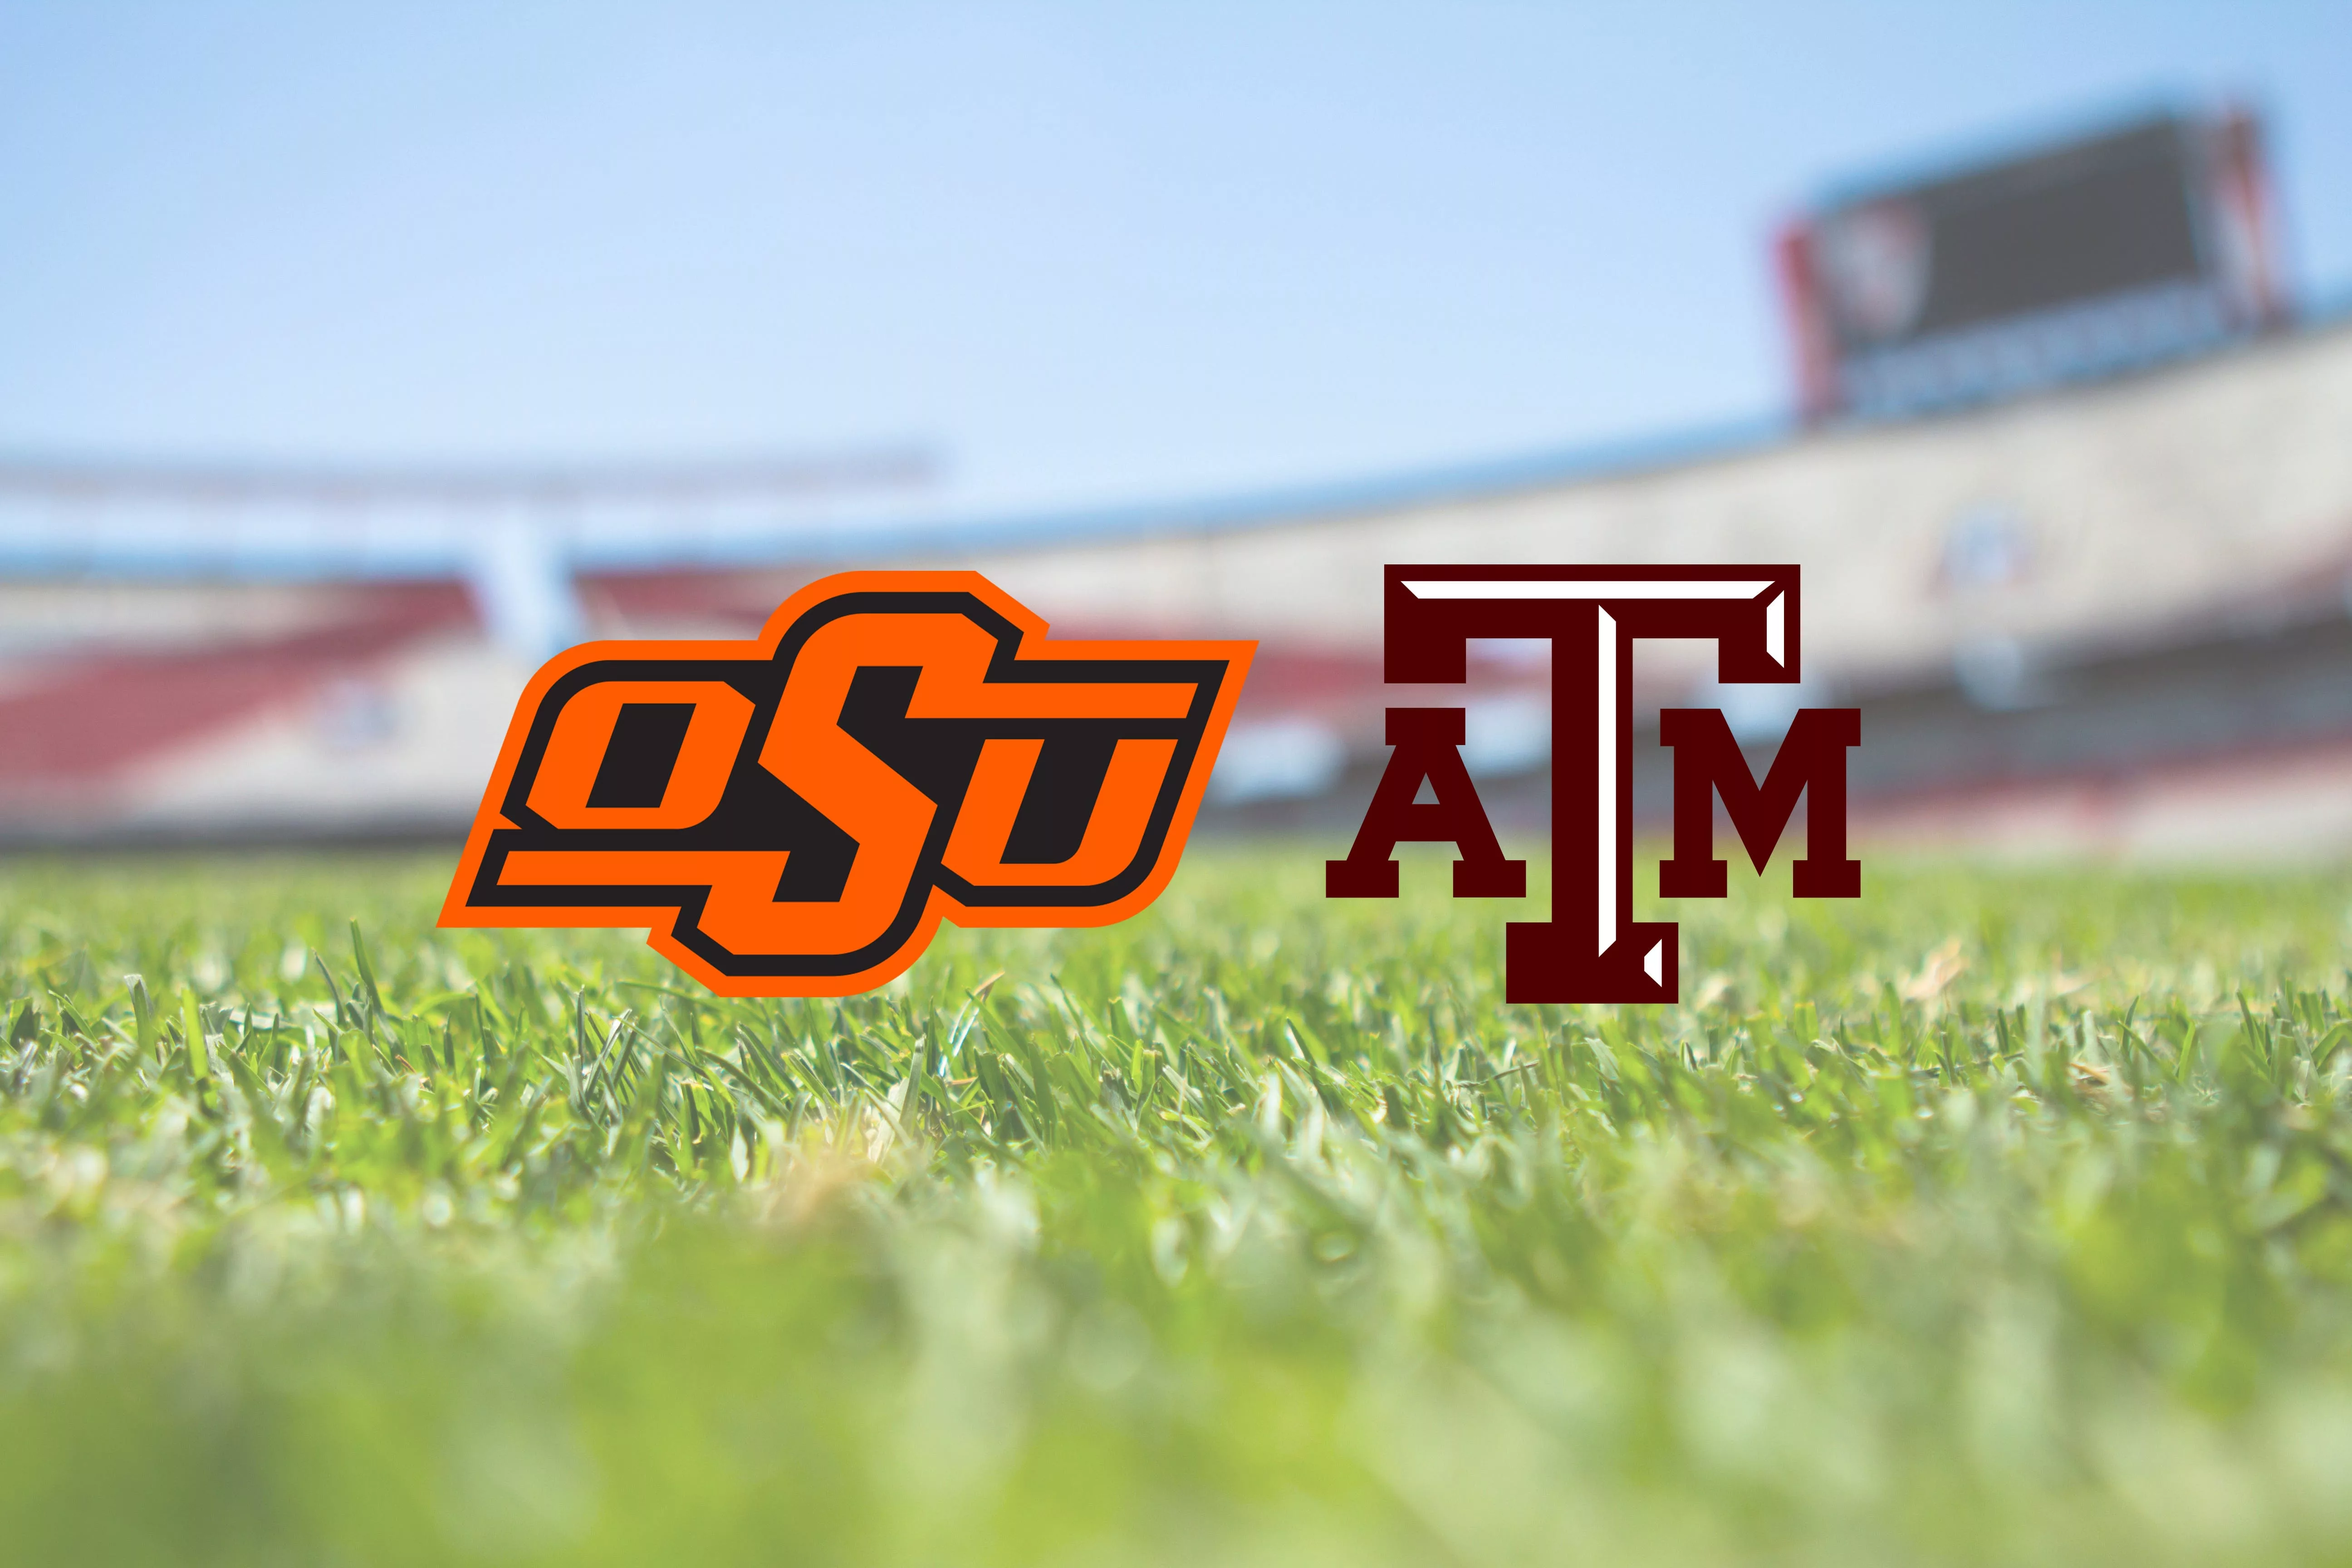 Texas Bowl Preview: Oklahoma State vs. Texas A&M - Football Field with Team Logos